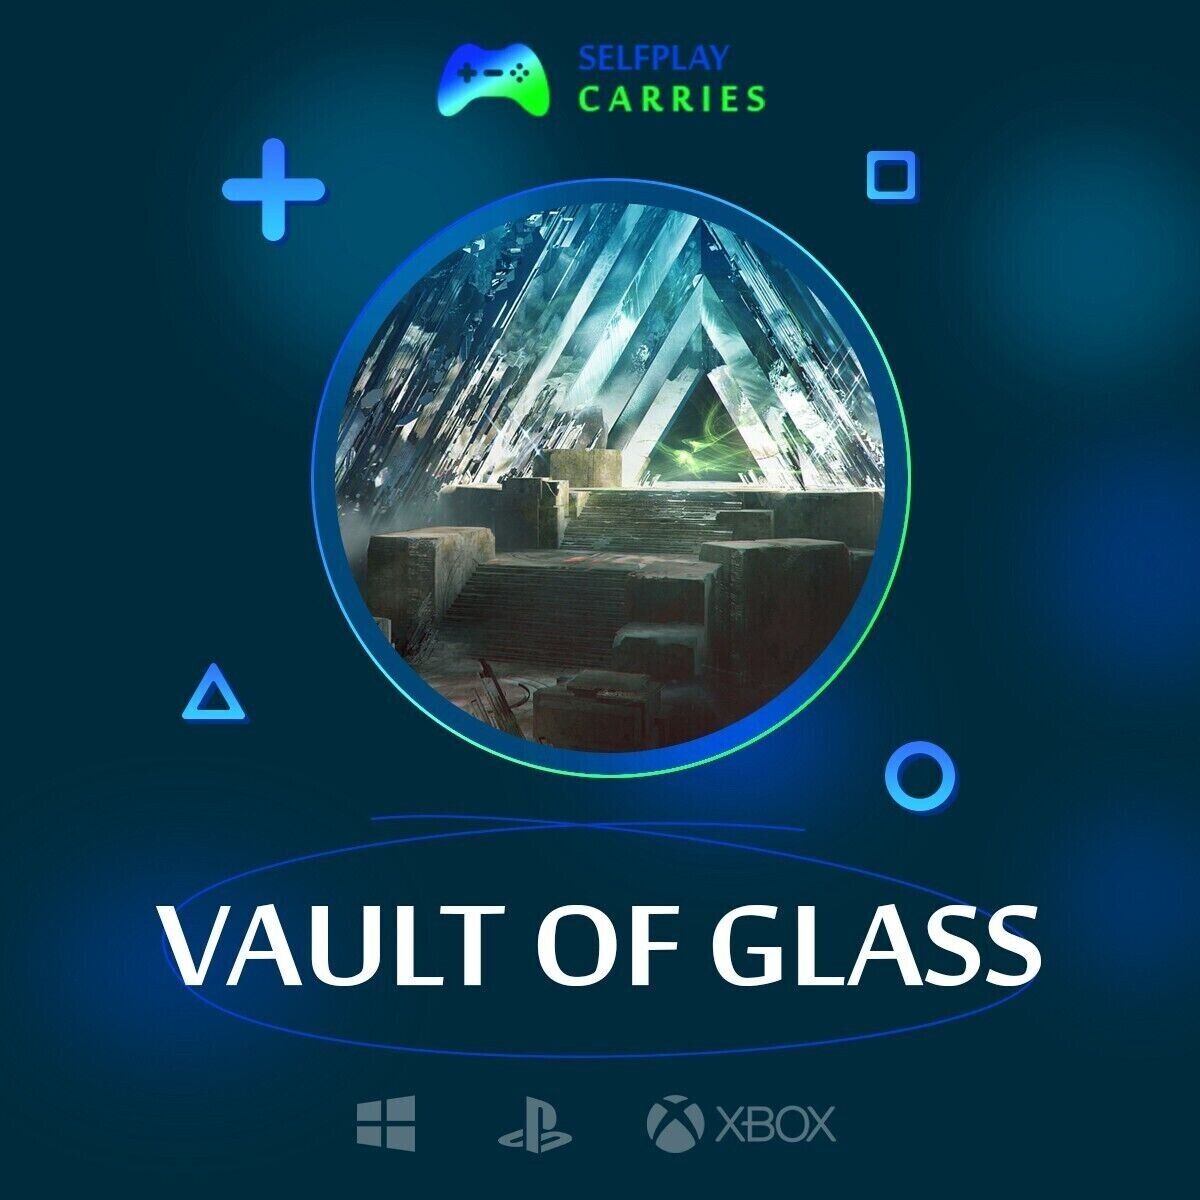 Vault of Glass Selfplay Carry